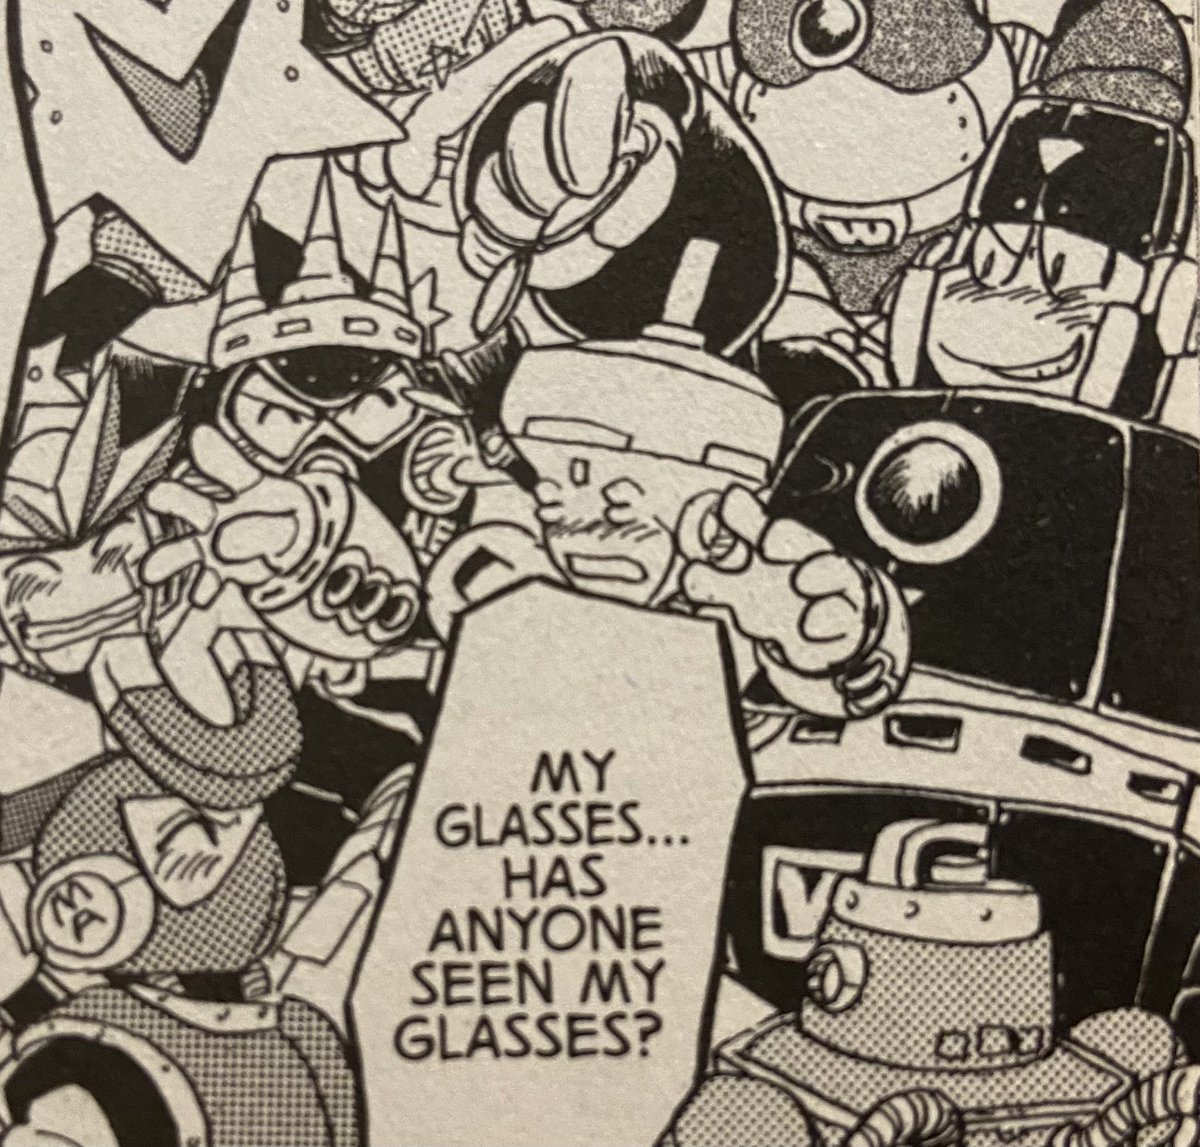 TOPMAN WITH GLASSES!! (hardman please stop 😭)